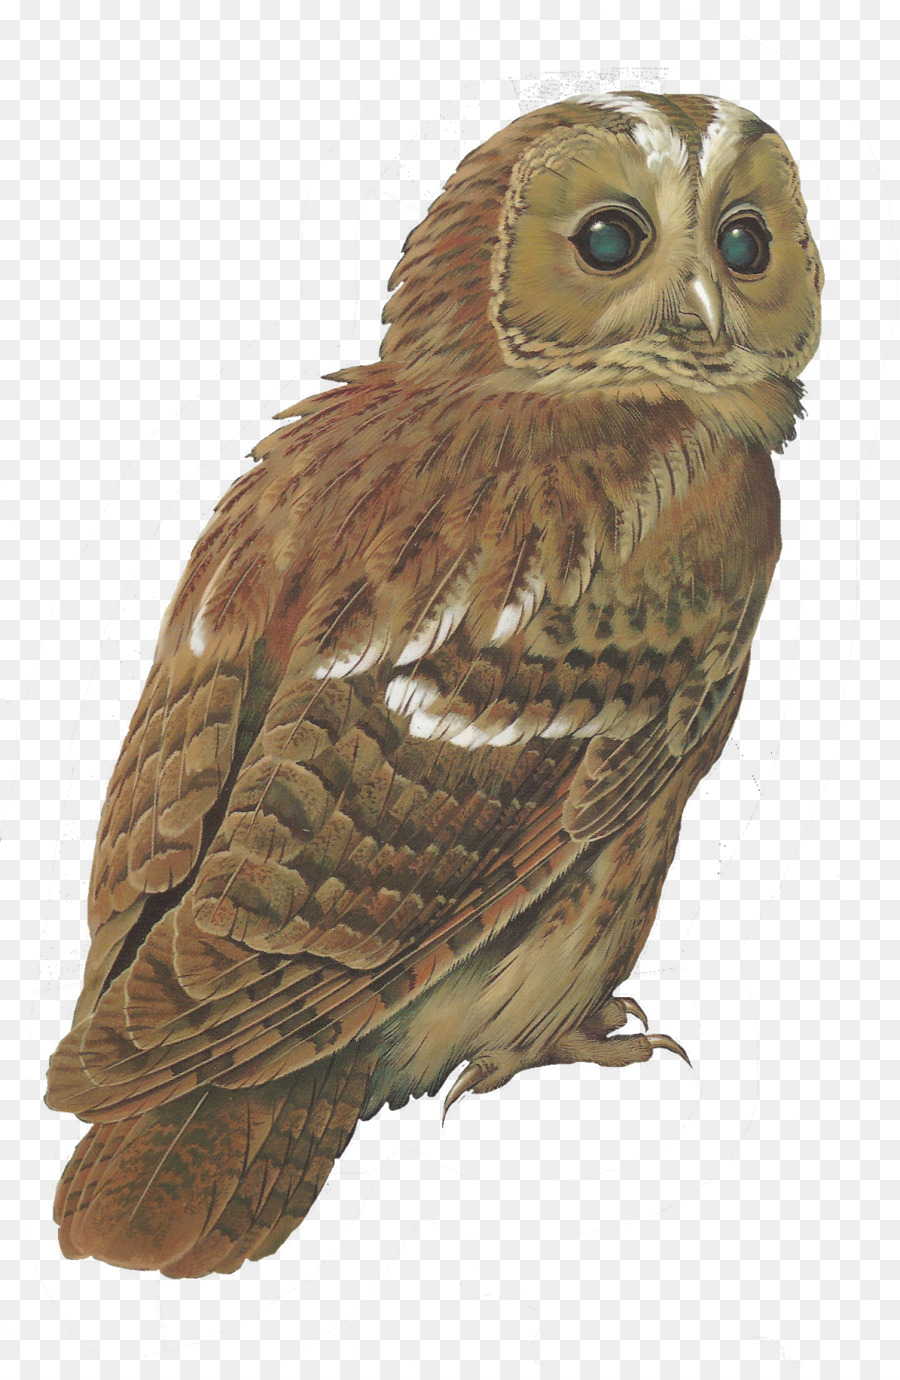 Tawny owl Bird Barred Owl Clip art - owls png download - 1054*1600 - Free Transparent Tawny Owl png Download.